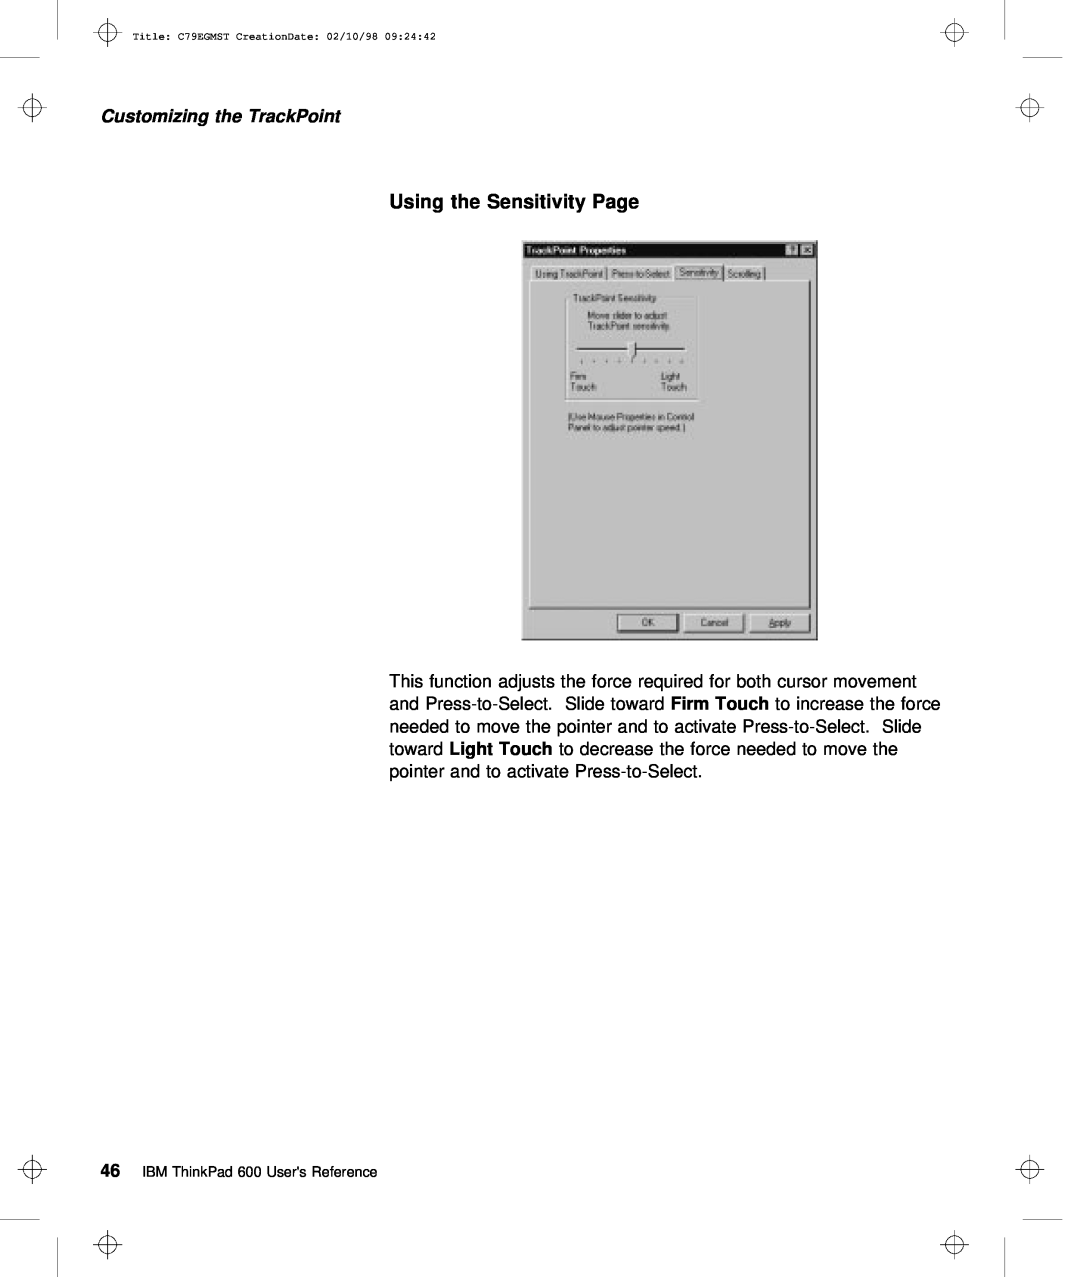 IBM C79EGMST manual Using the Sensitivity Page, Customizing the TrackPoint, towardLight Touch 